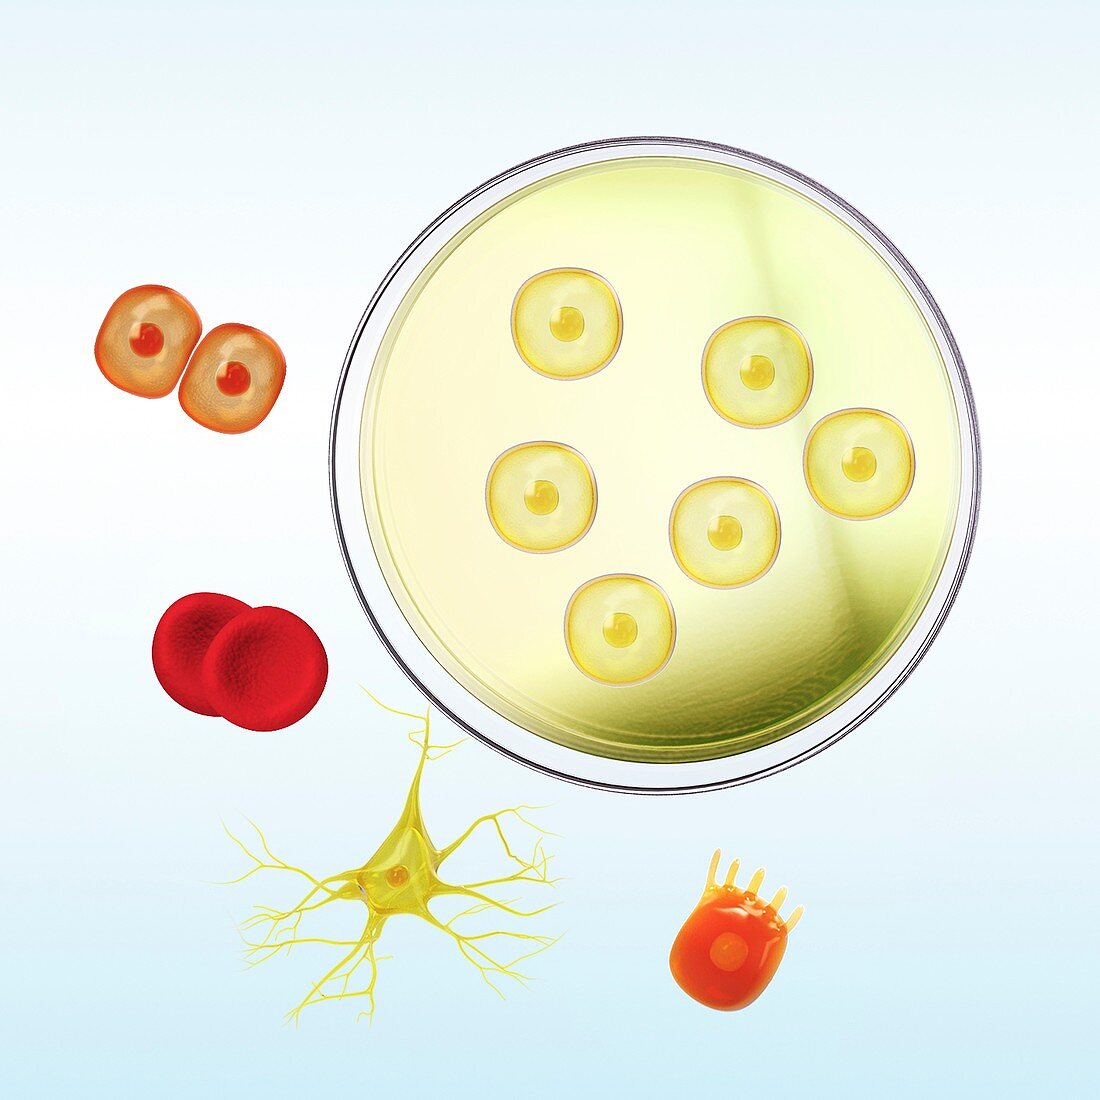 Culturing stem cells, illustration